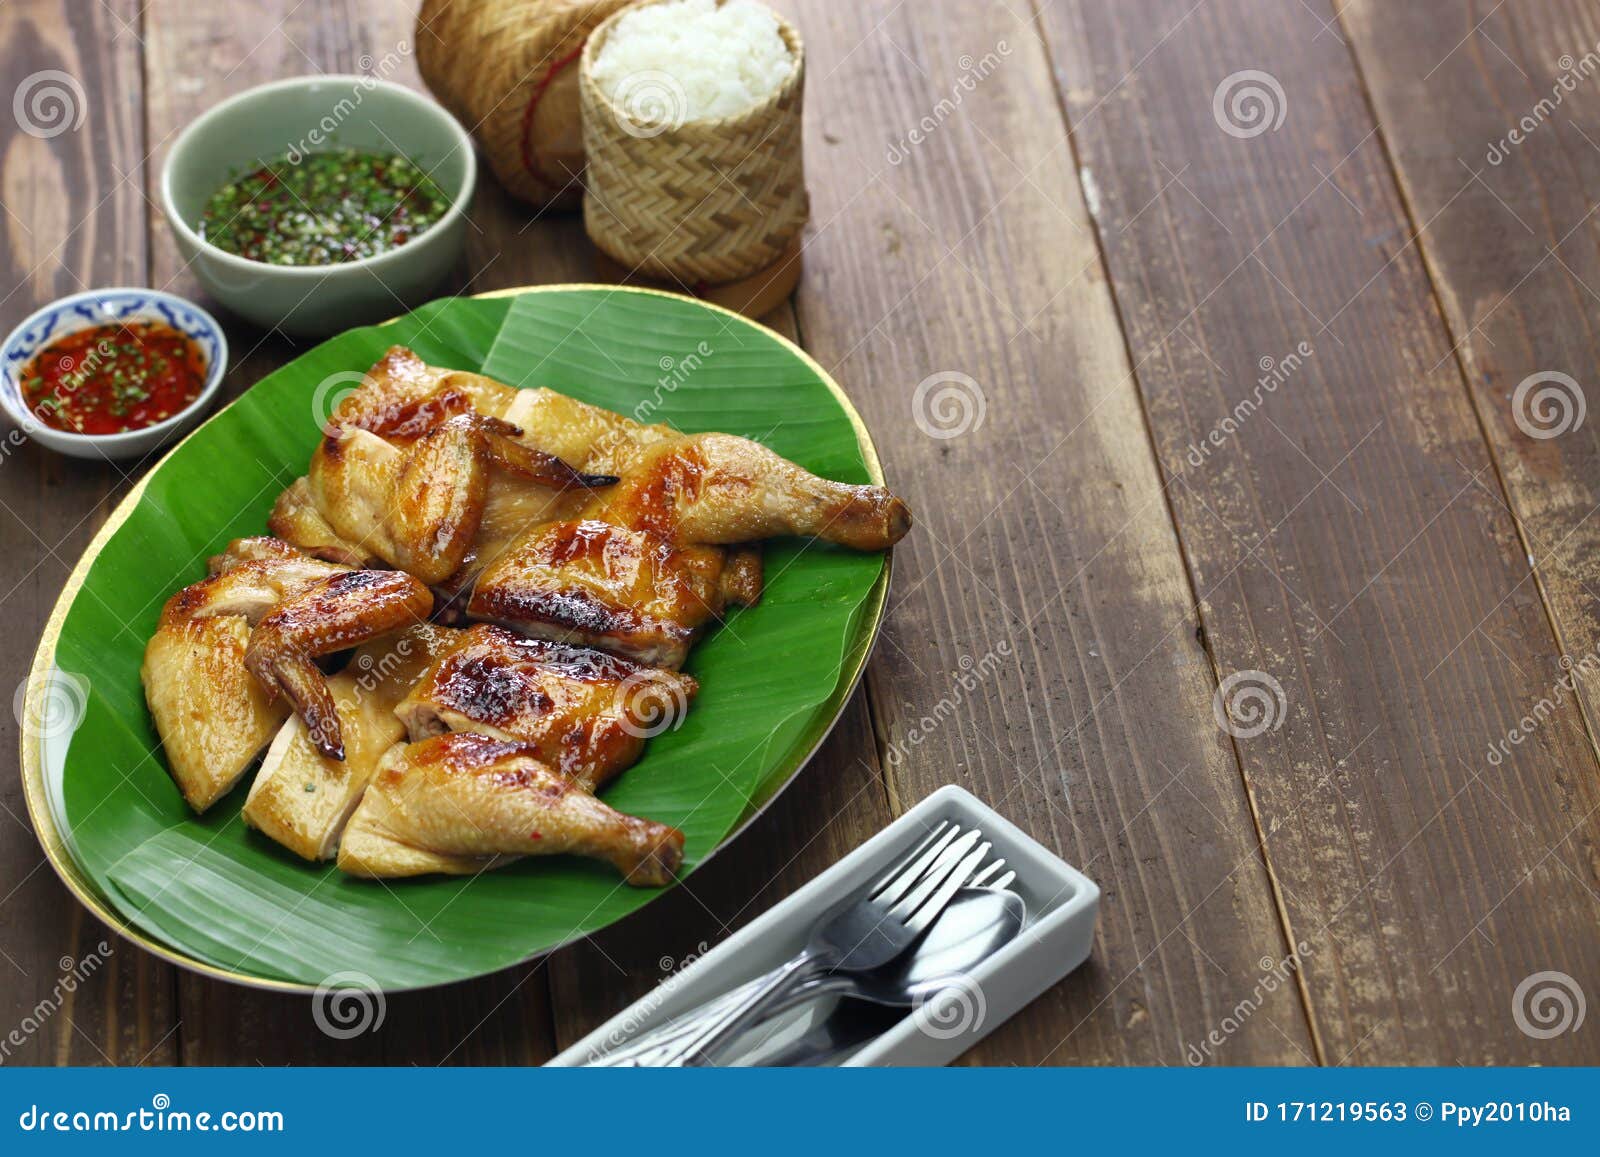 gai yang, thai style grilled chicken